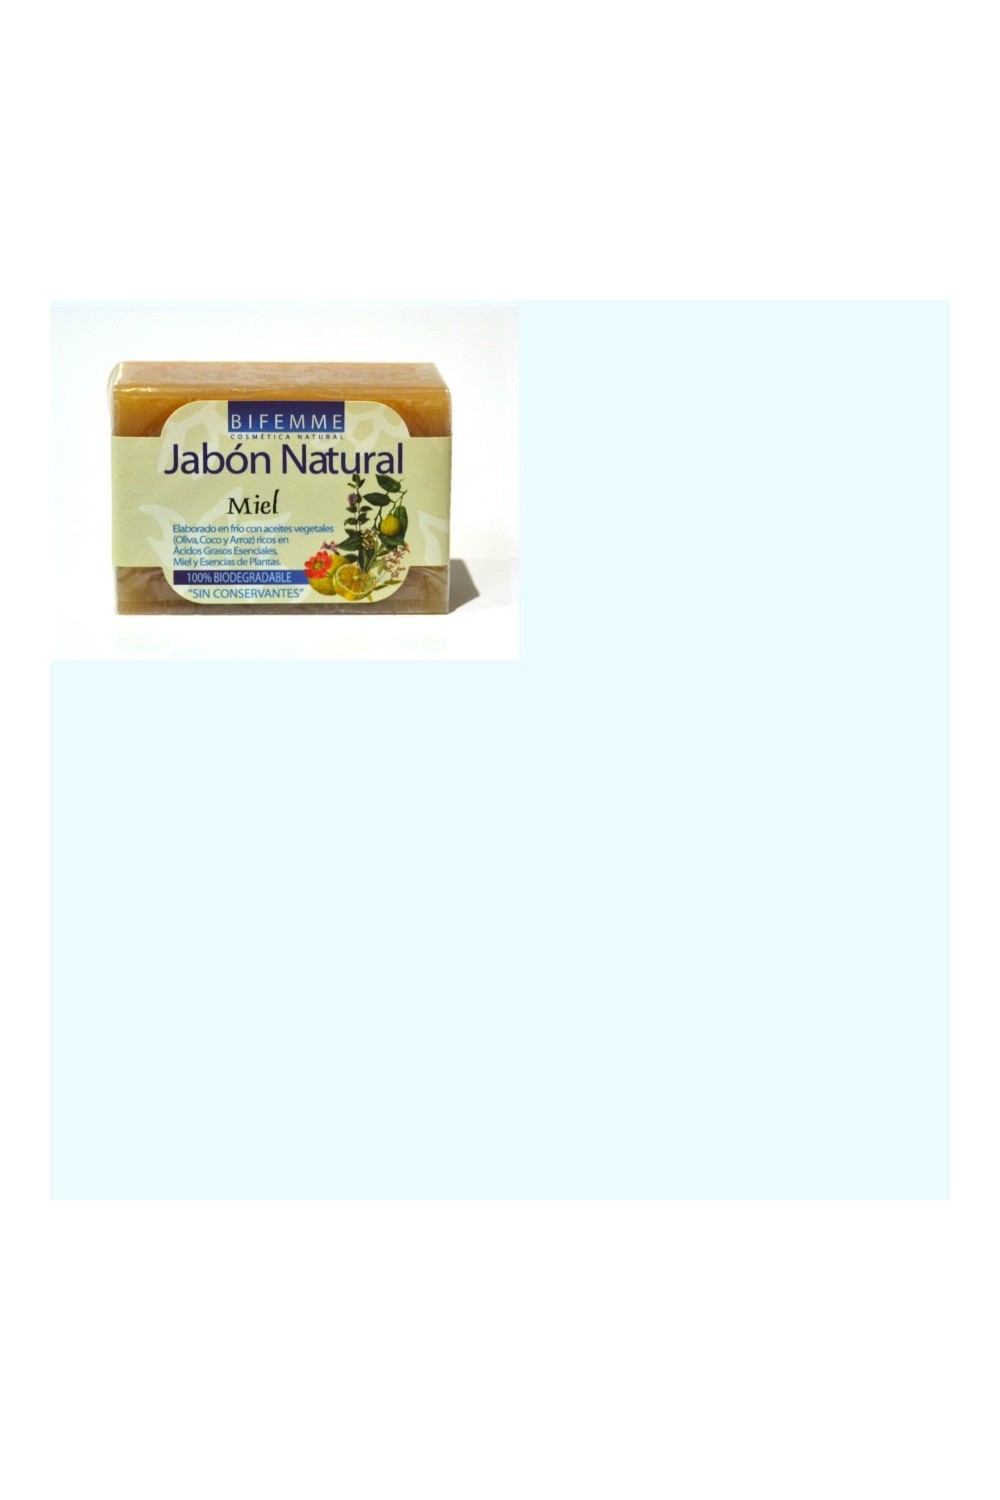 Ynsadiet Jabon Natural Miel 100g